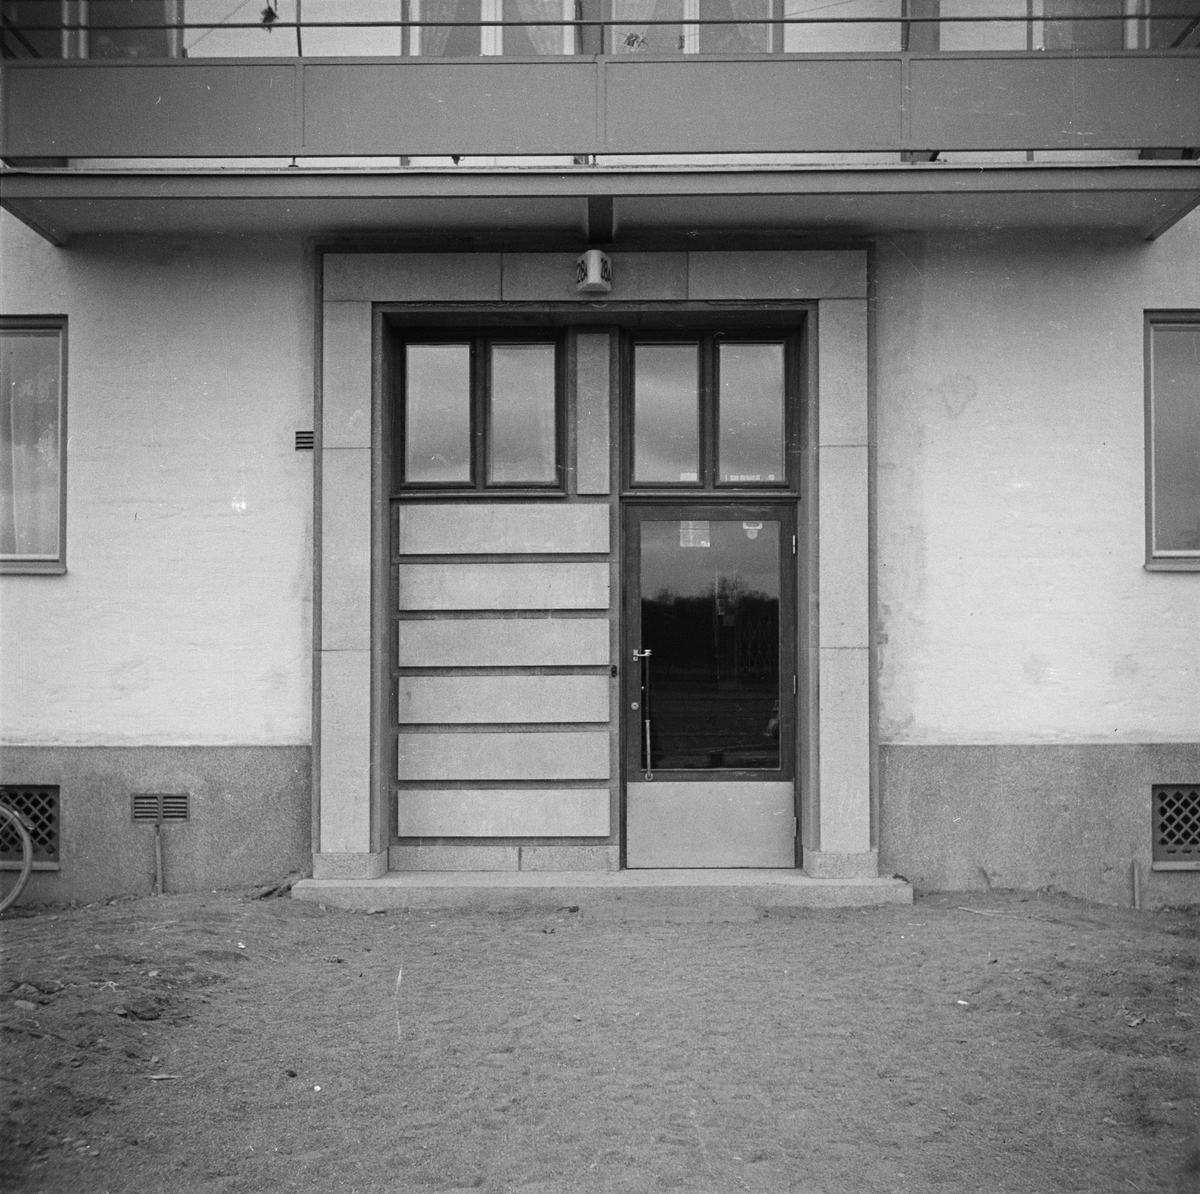 Port i flerbostadshus, sannolikt Uppsala 1939